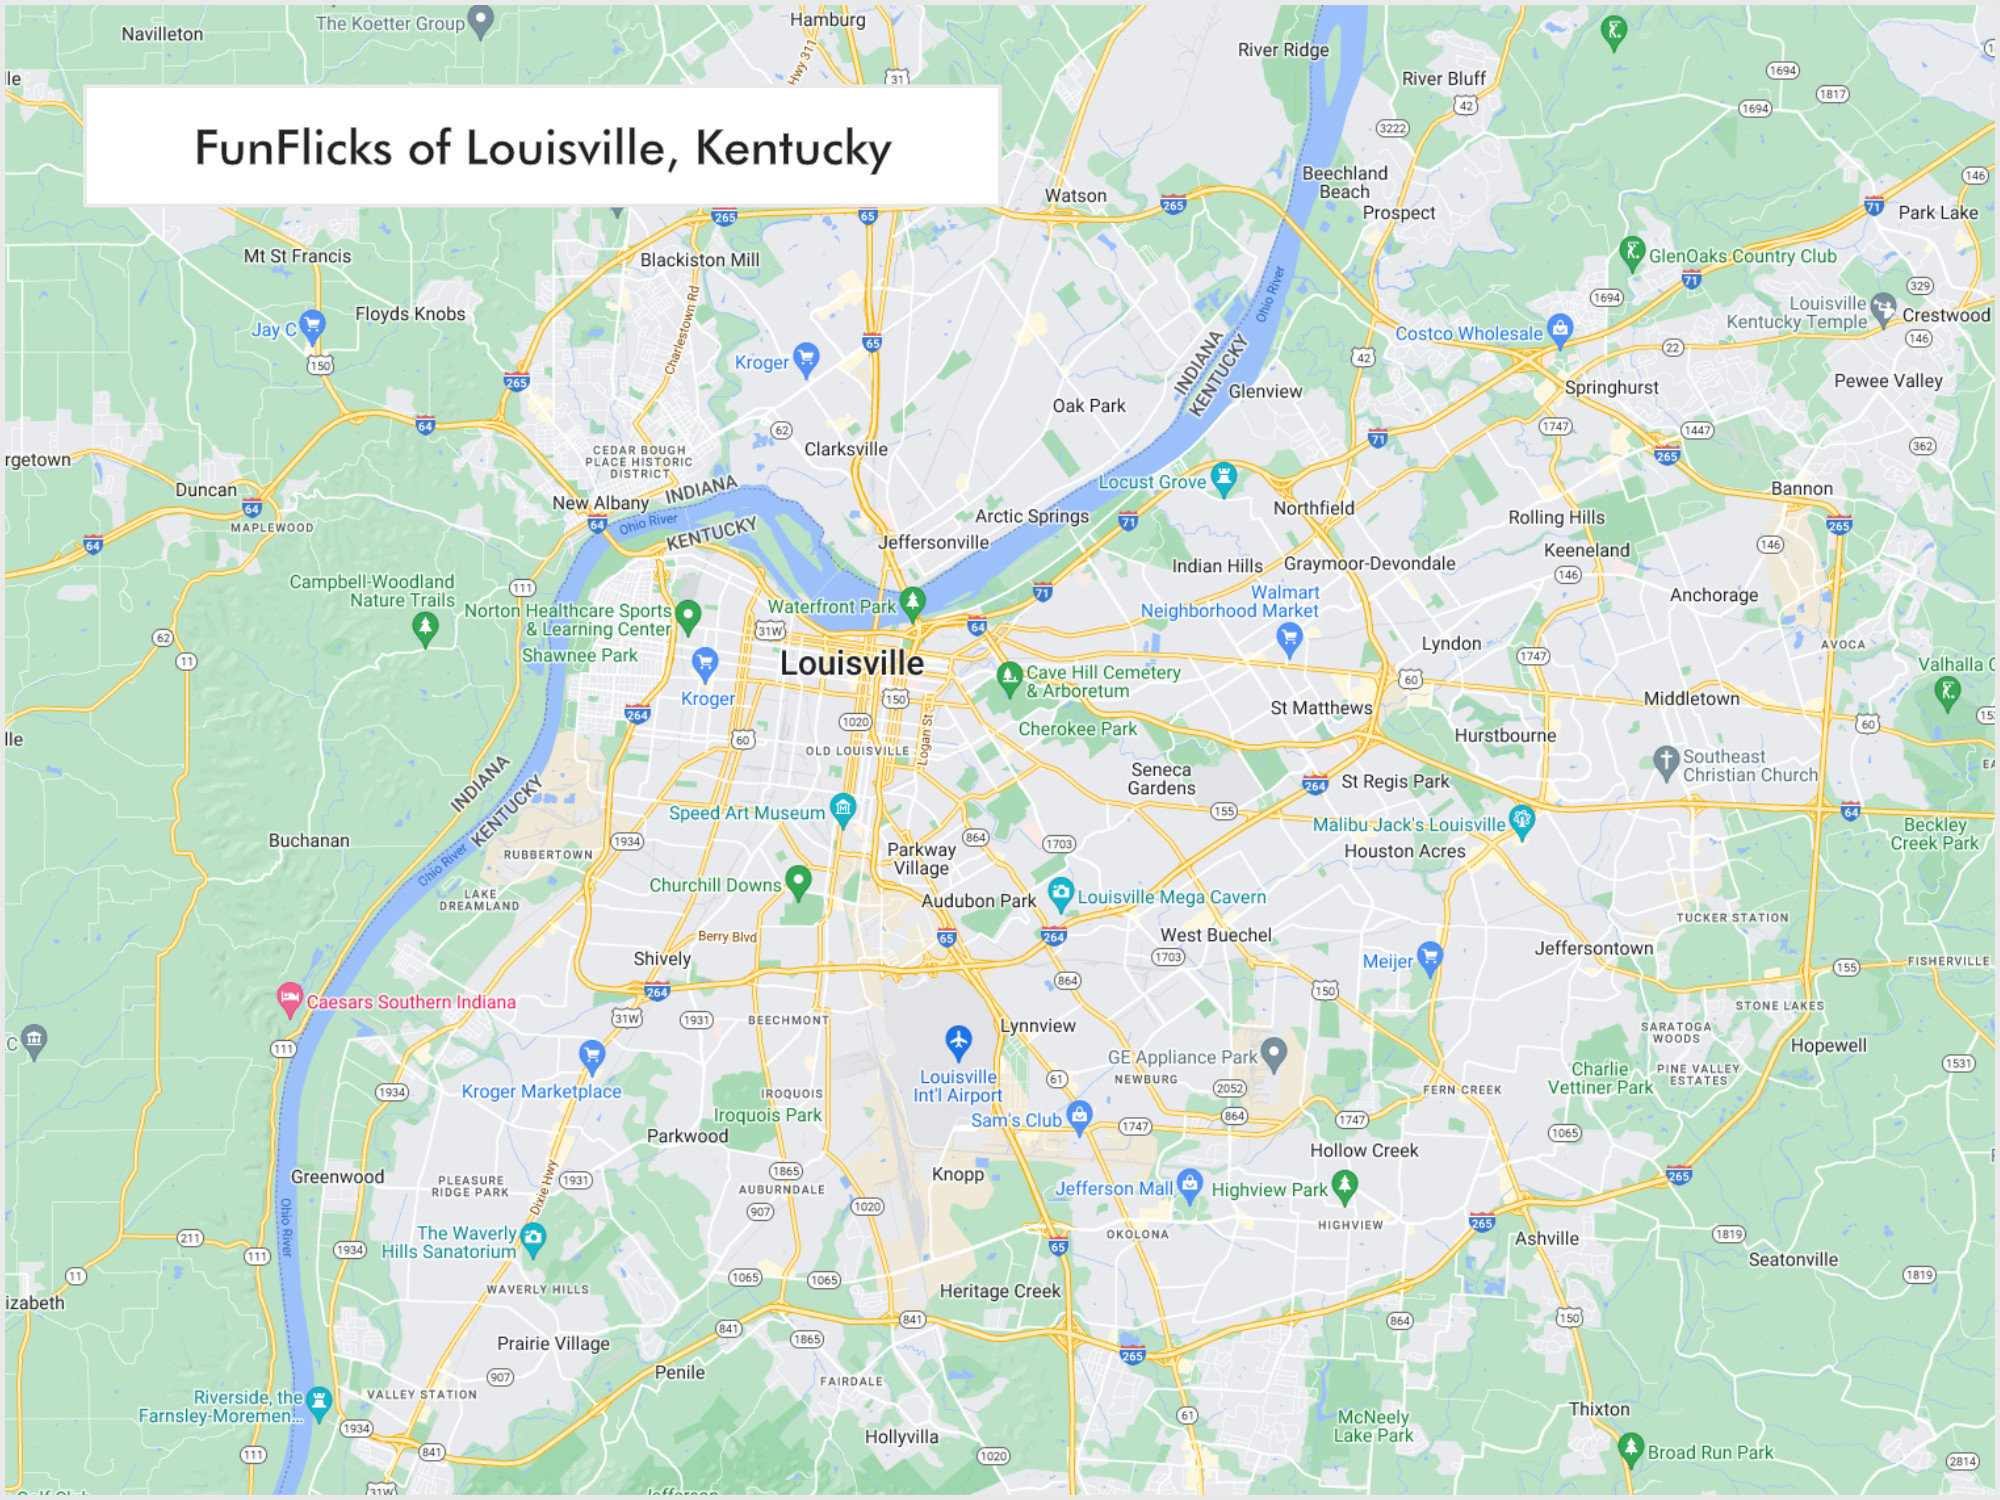 FunFlicks® Louisville territory map